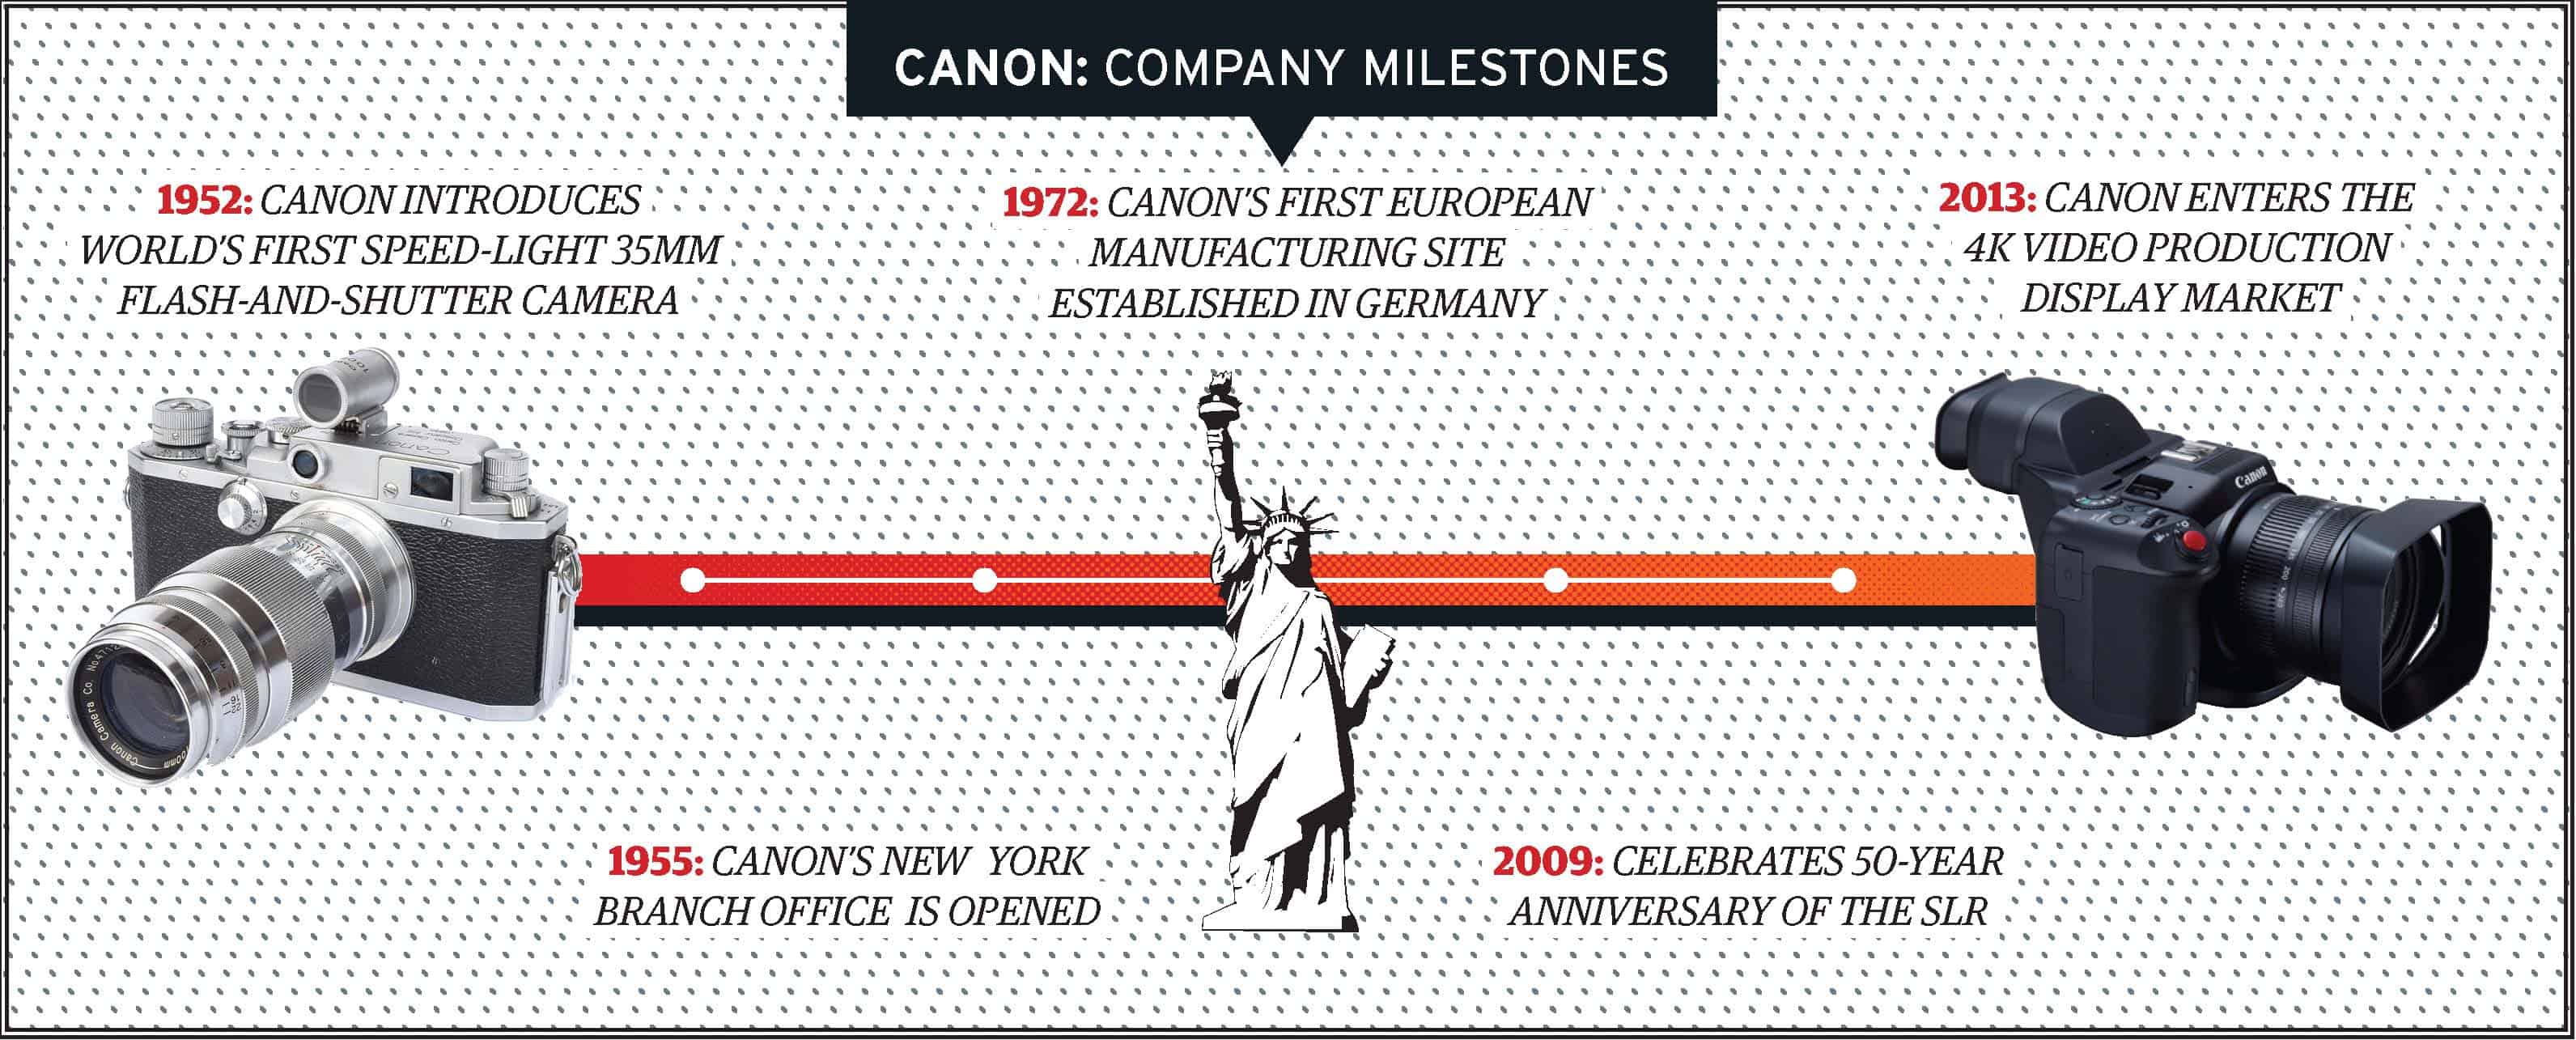 Canon milestones